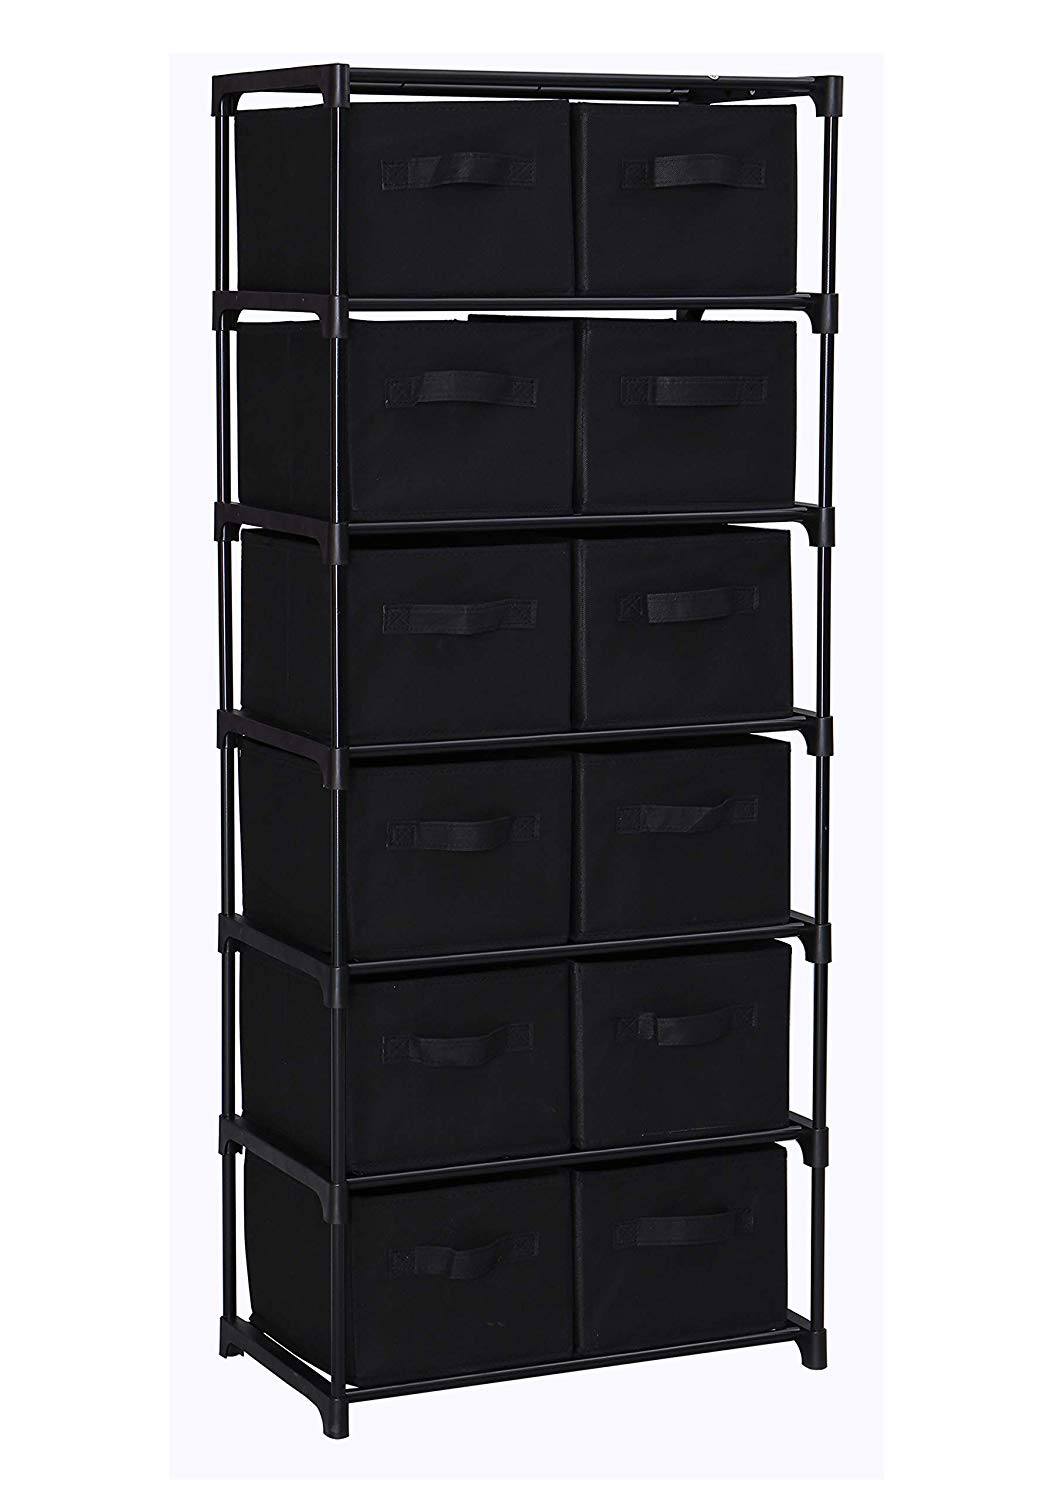 Homebi Drawers Storage Shelf Chest Unit Storage Cabinet Closet Organizer Rack Dresser Storage Towel with Non-Woven Fabric Bins (Black 12-Drawer)